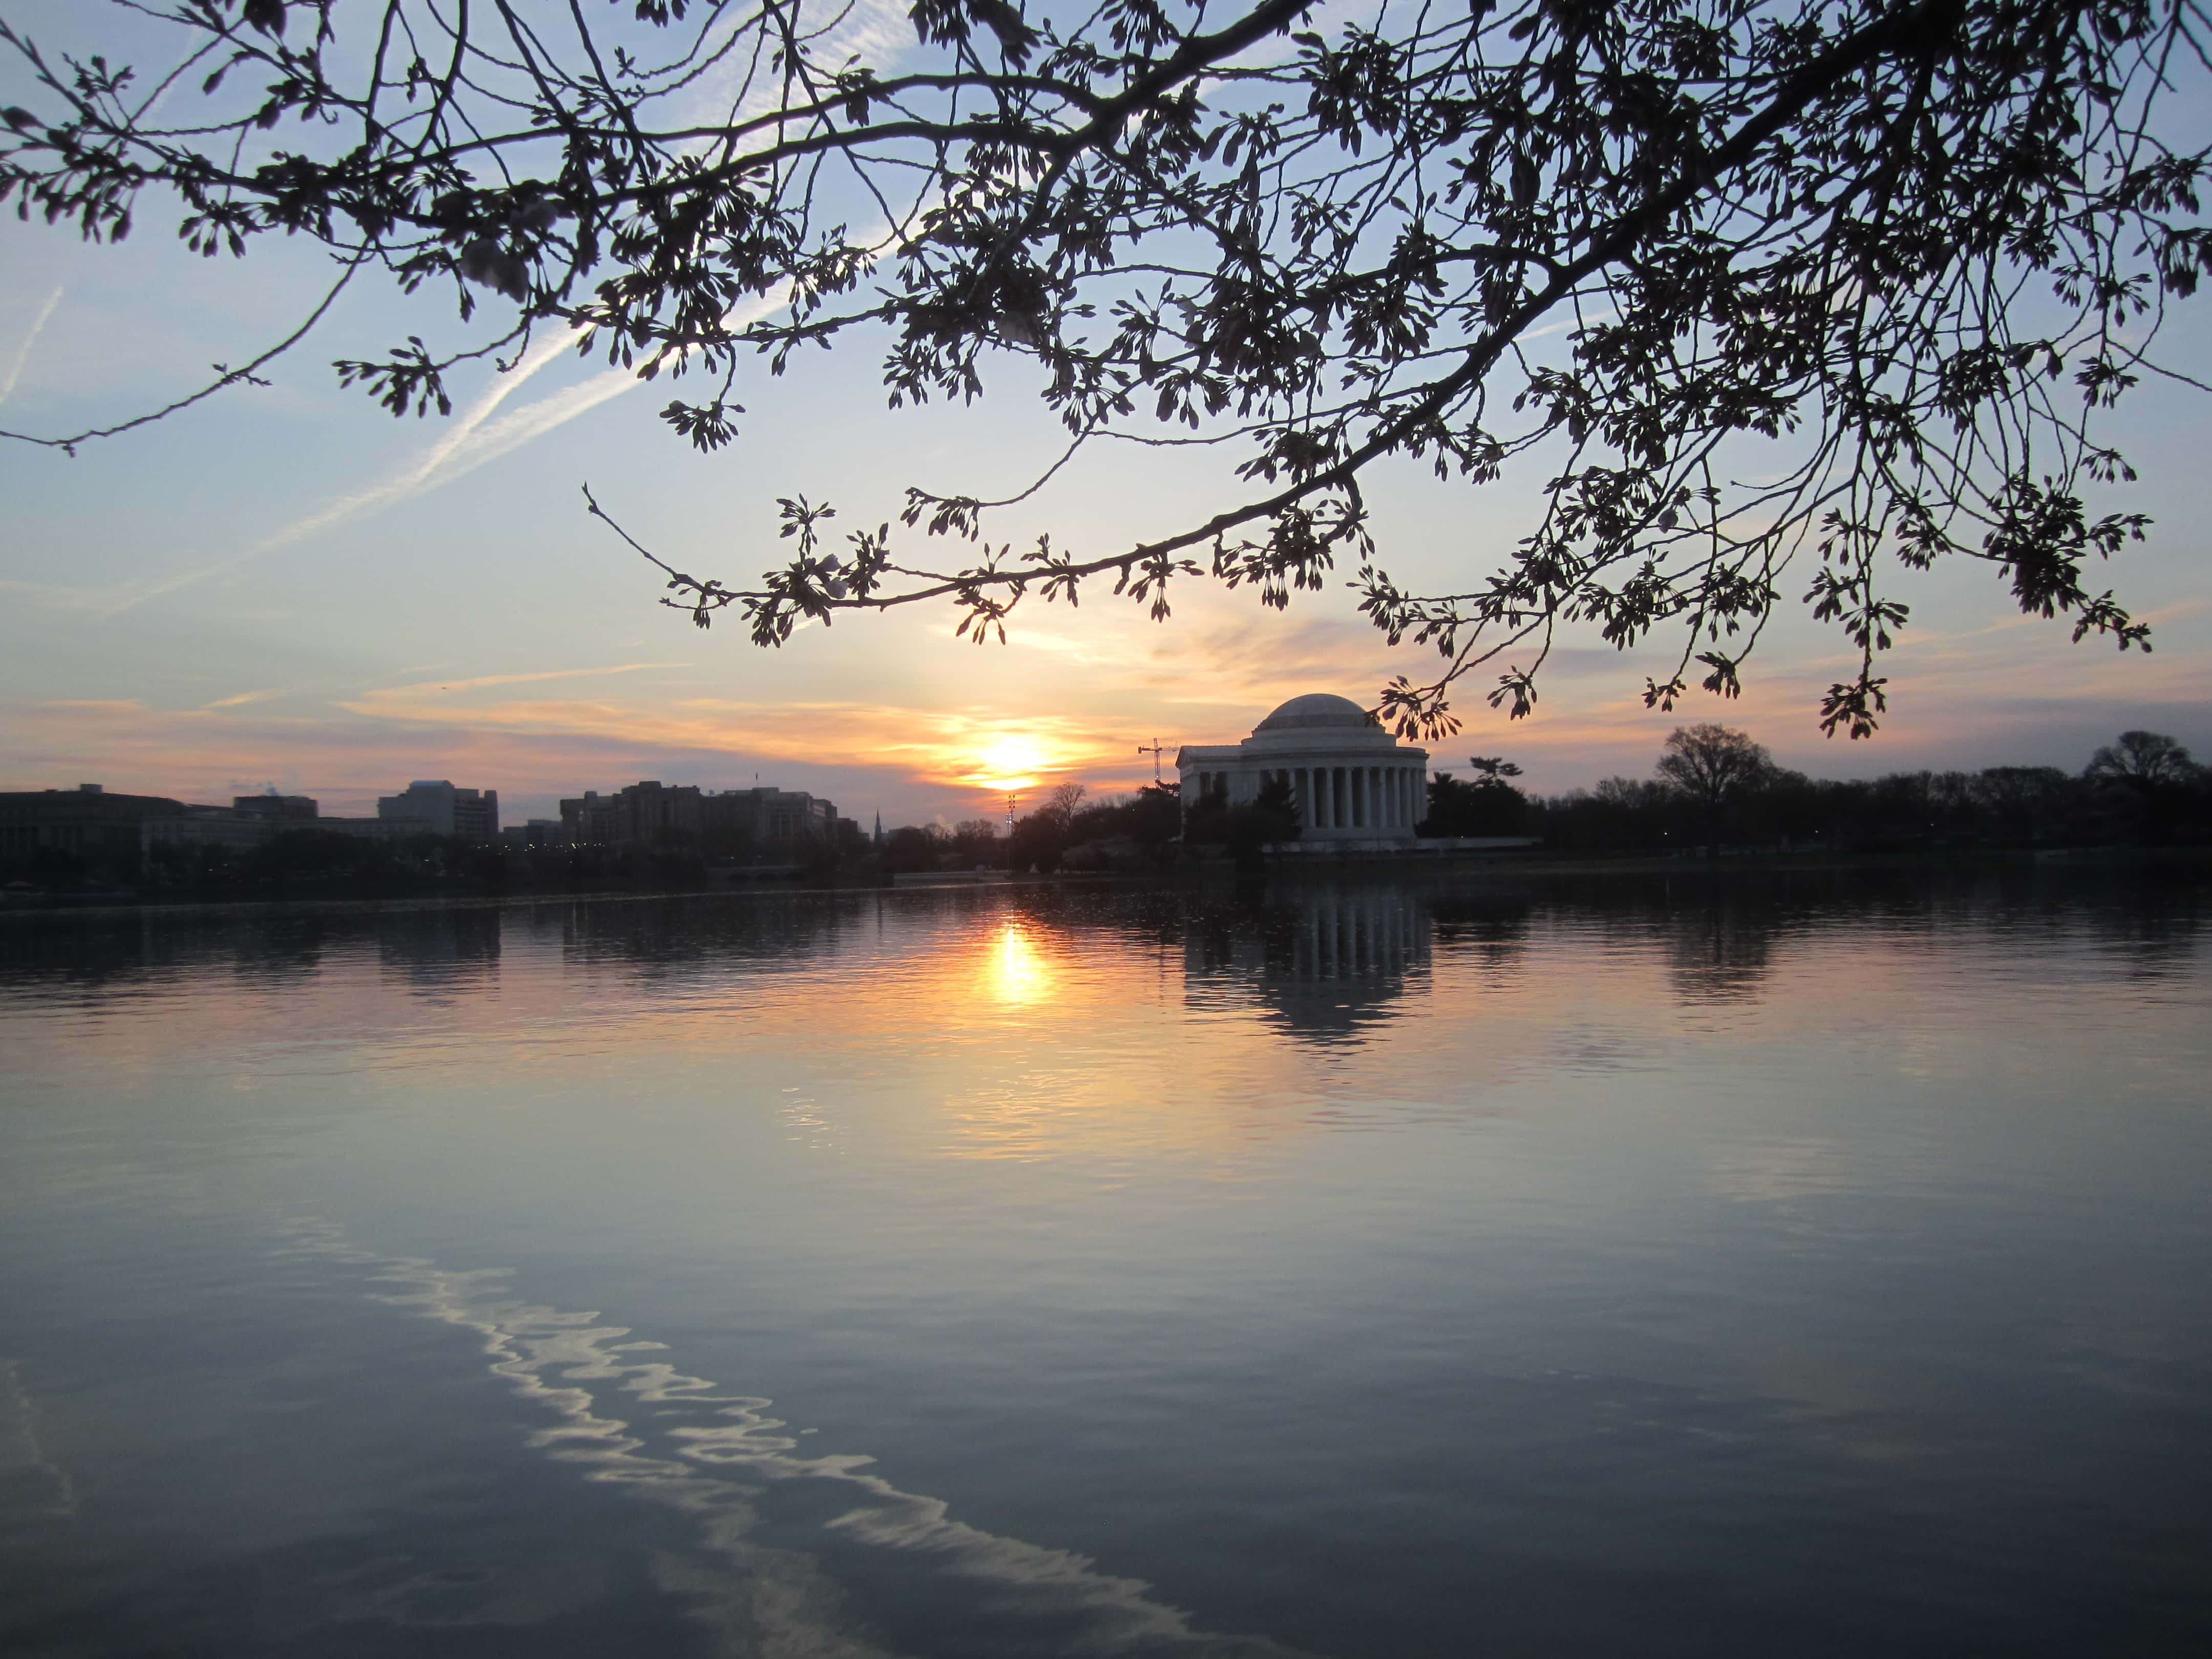 Jefferson Memorial at Sunrise with Cherry Blossoms -Washington DC Mar 2016